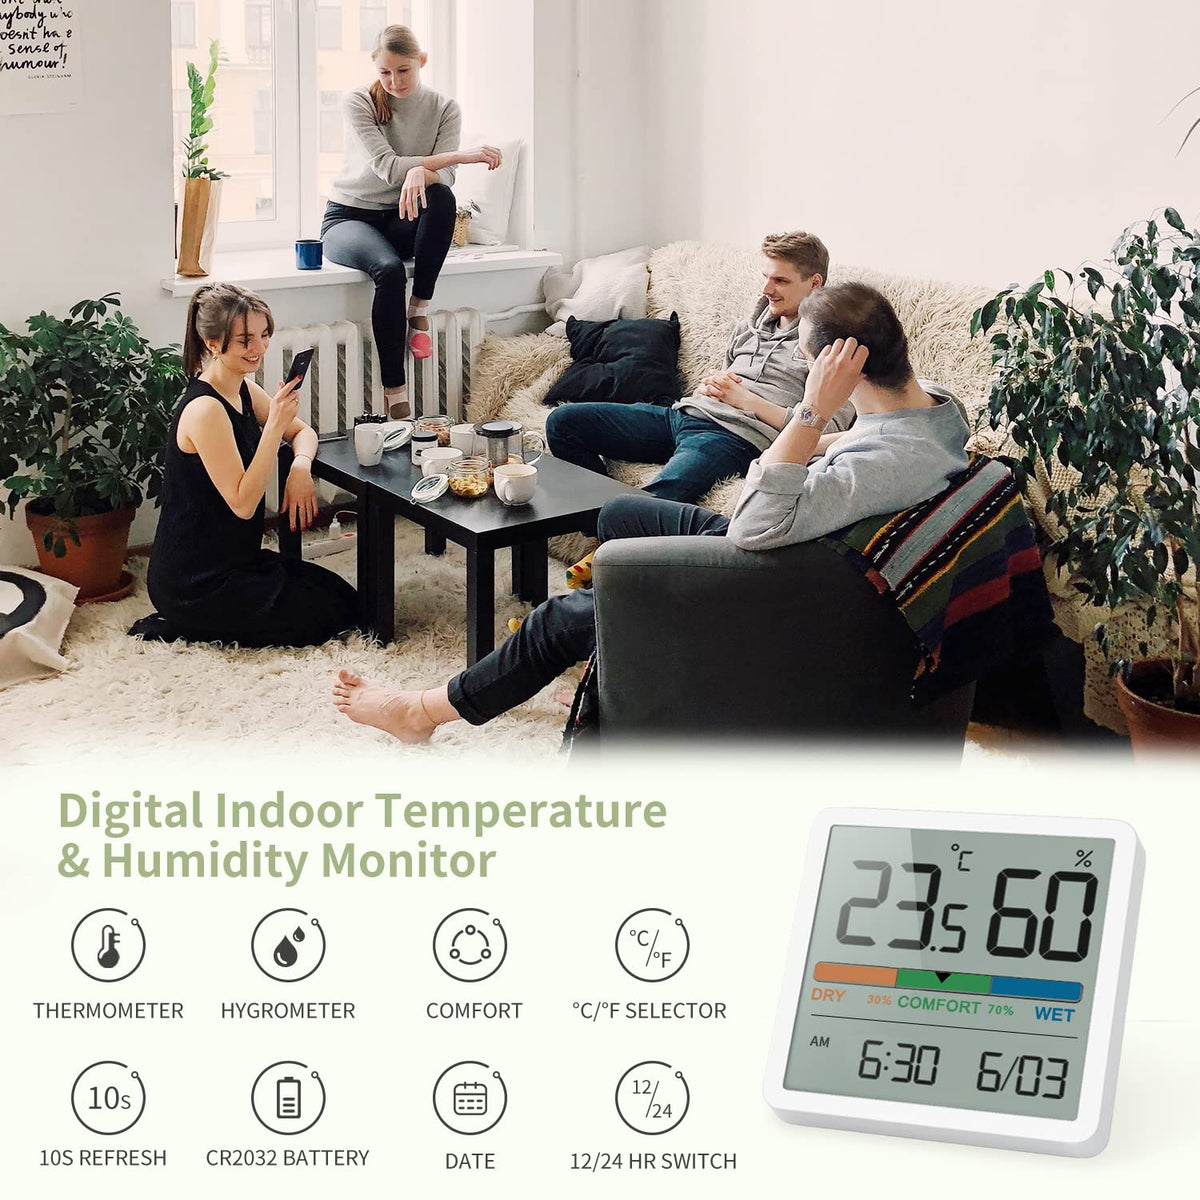 NOKLEAD Igrometro Termometro per interni - Indicatore digitale con sen –